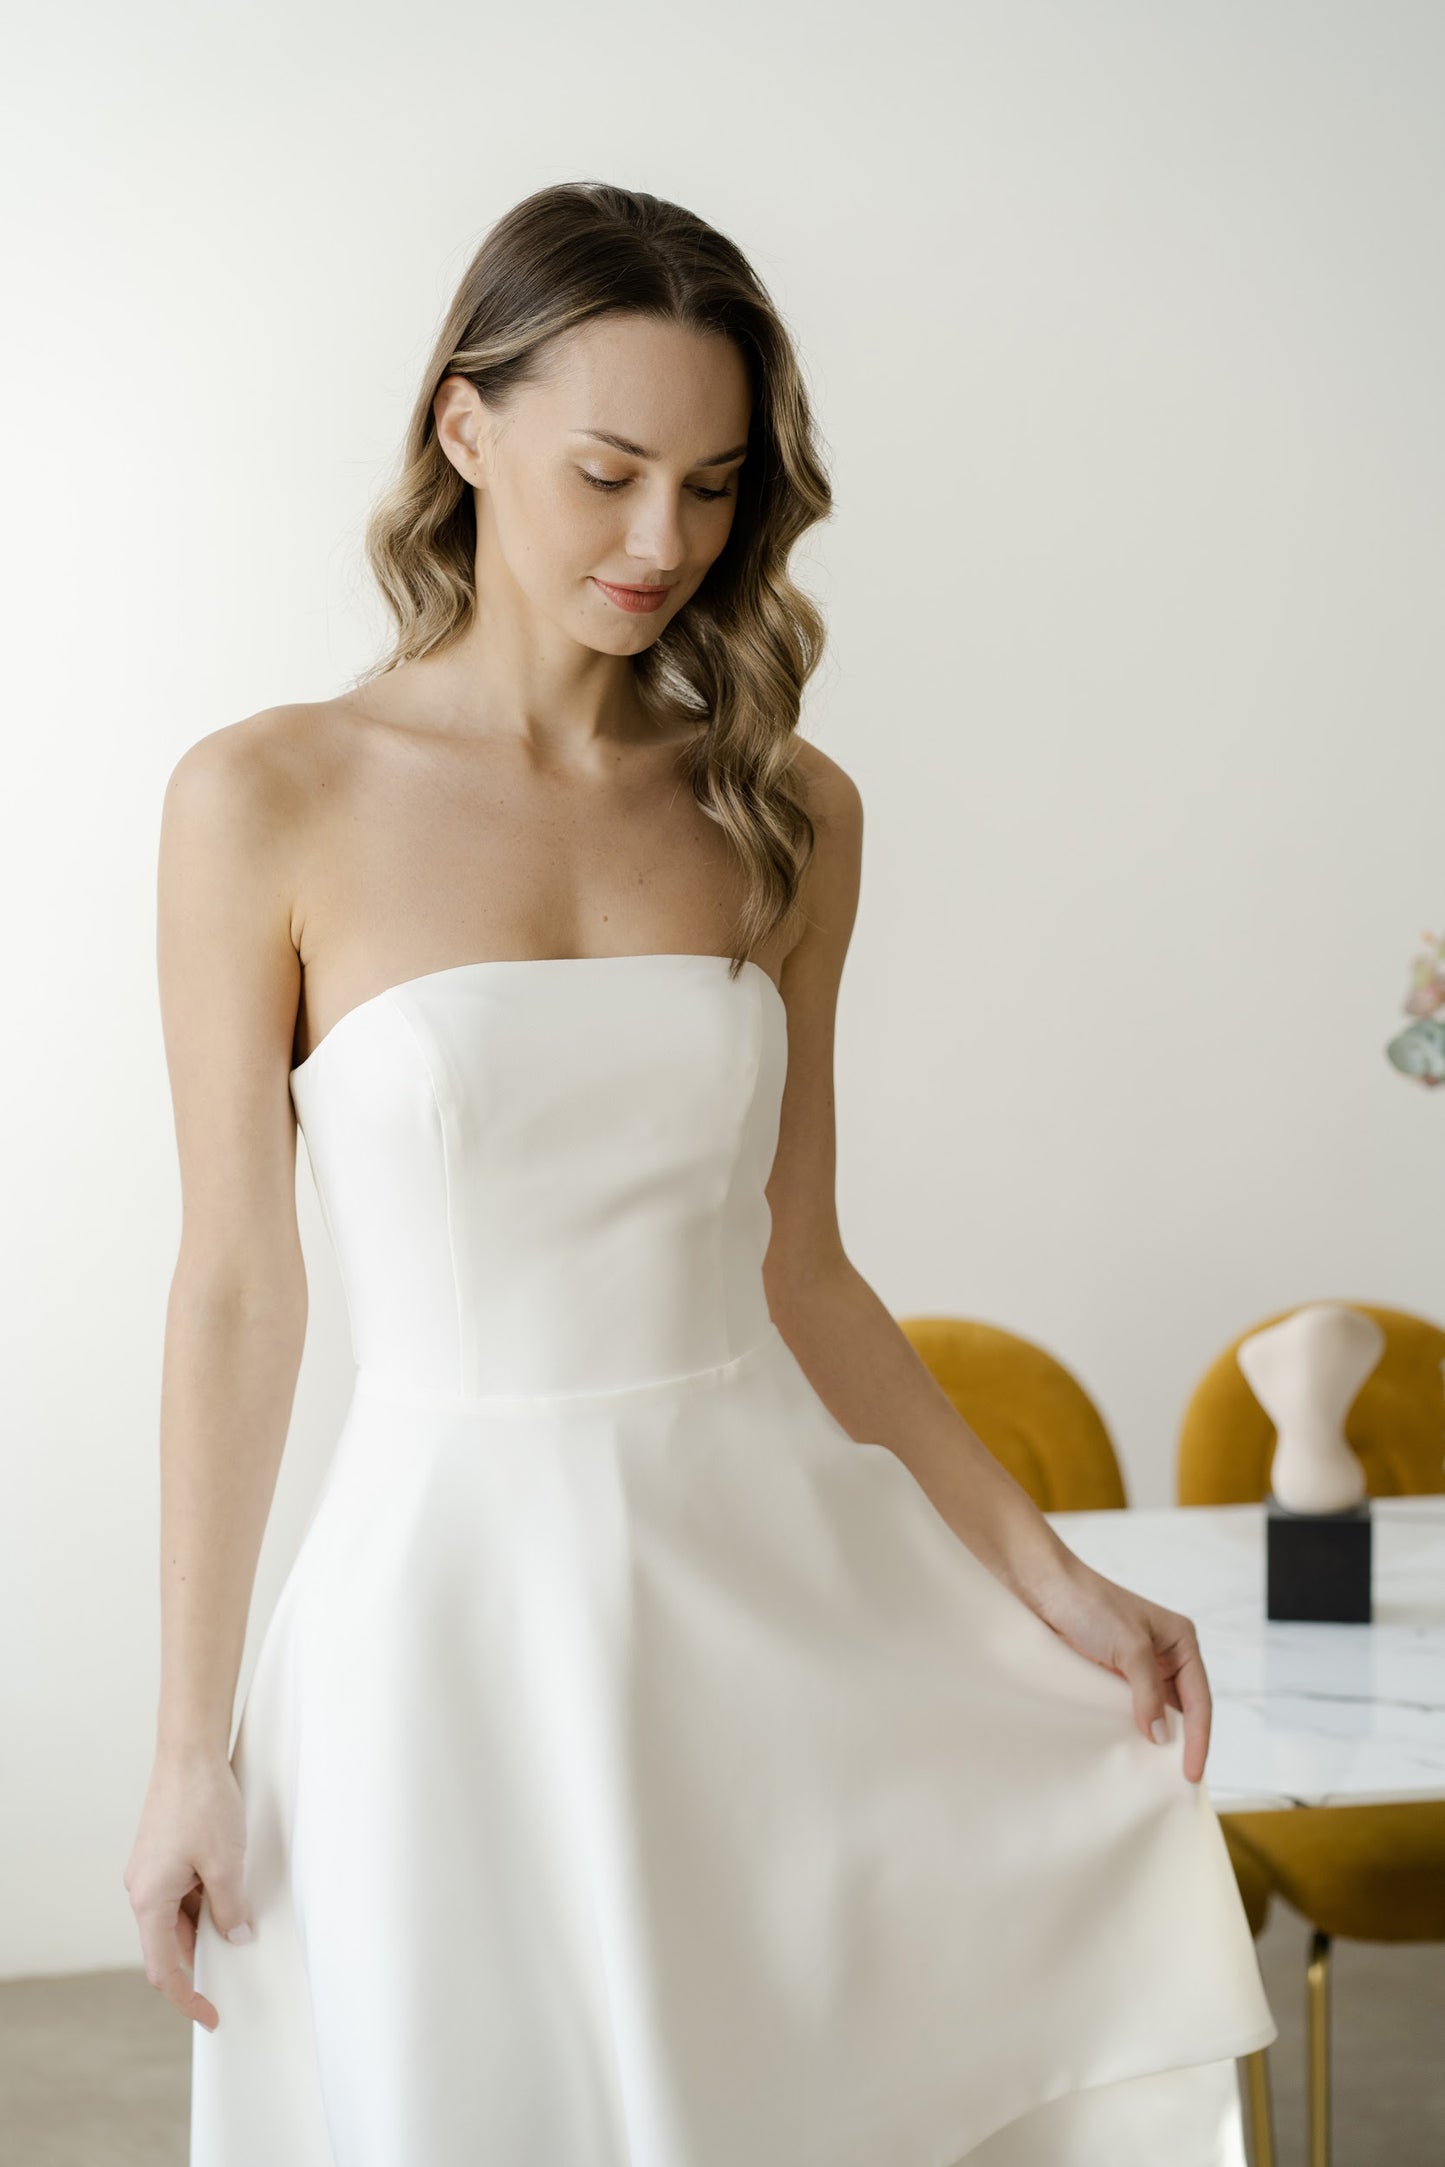 High low skirt • short wedding dress • elegant bridal gown